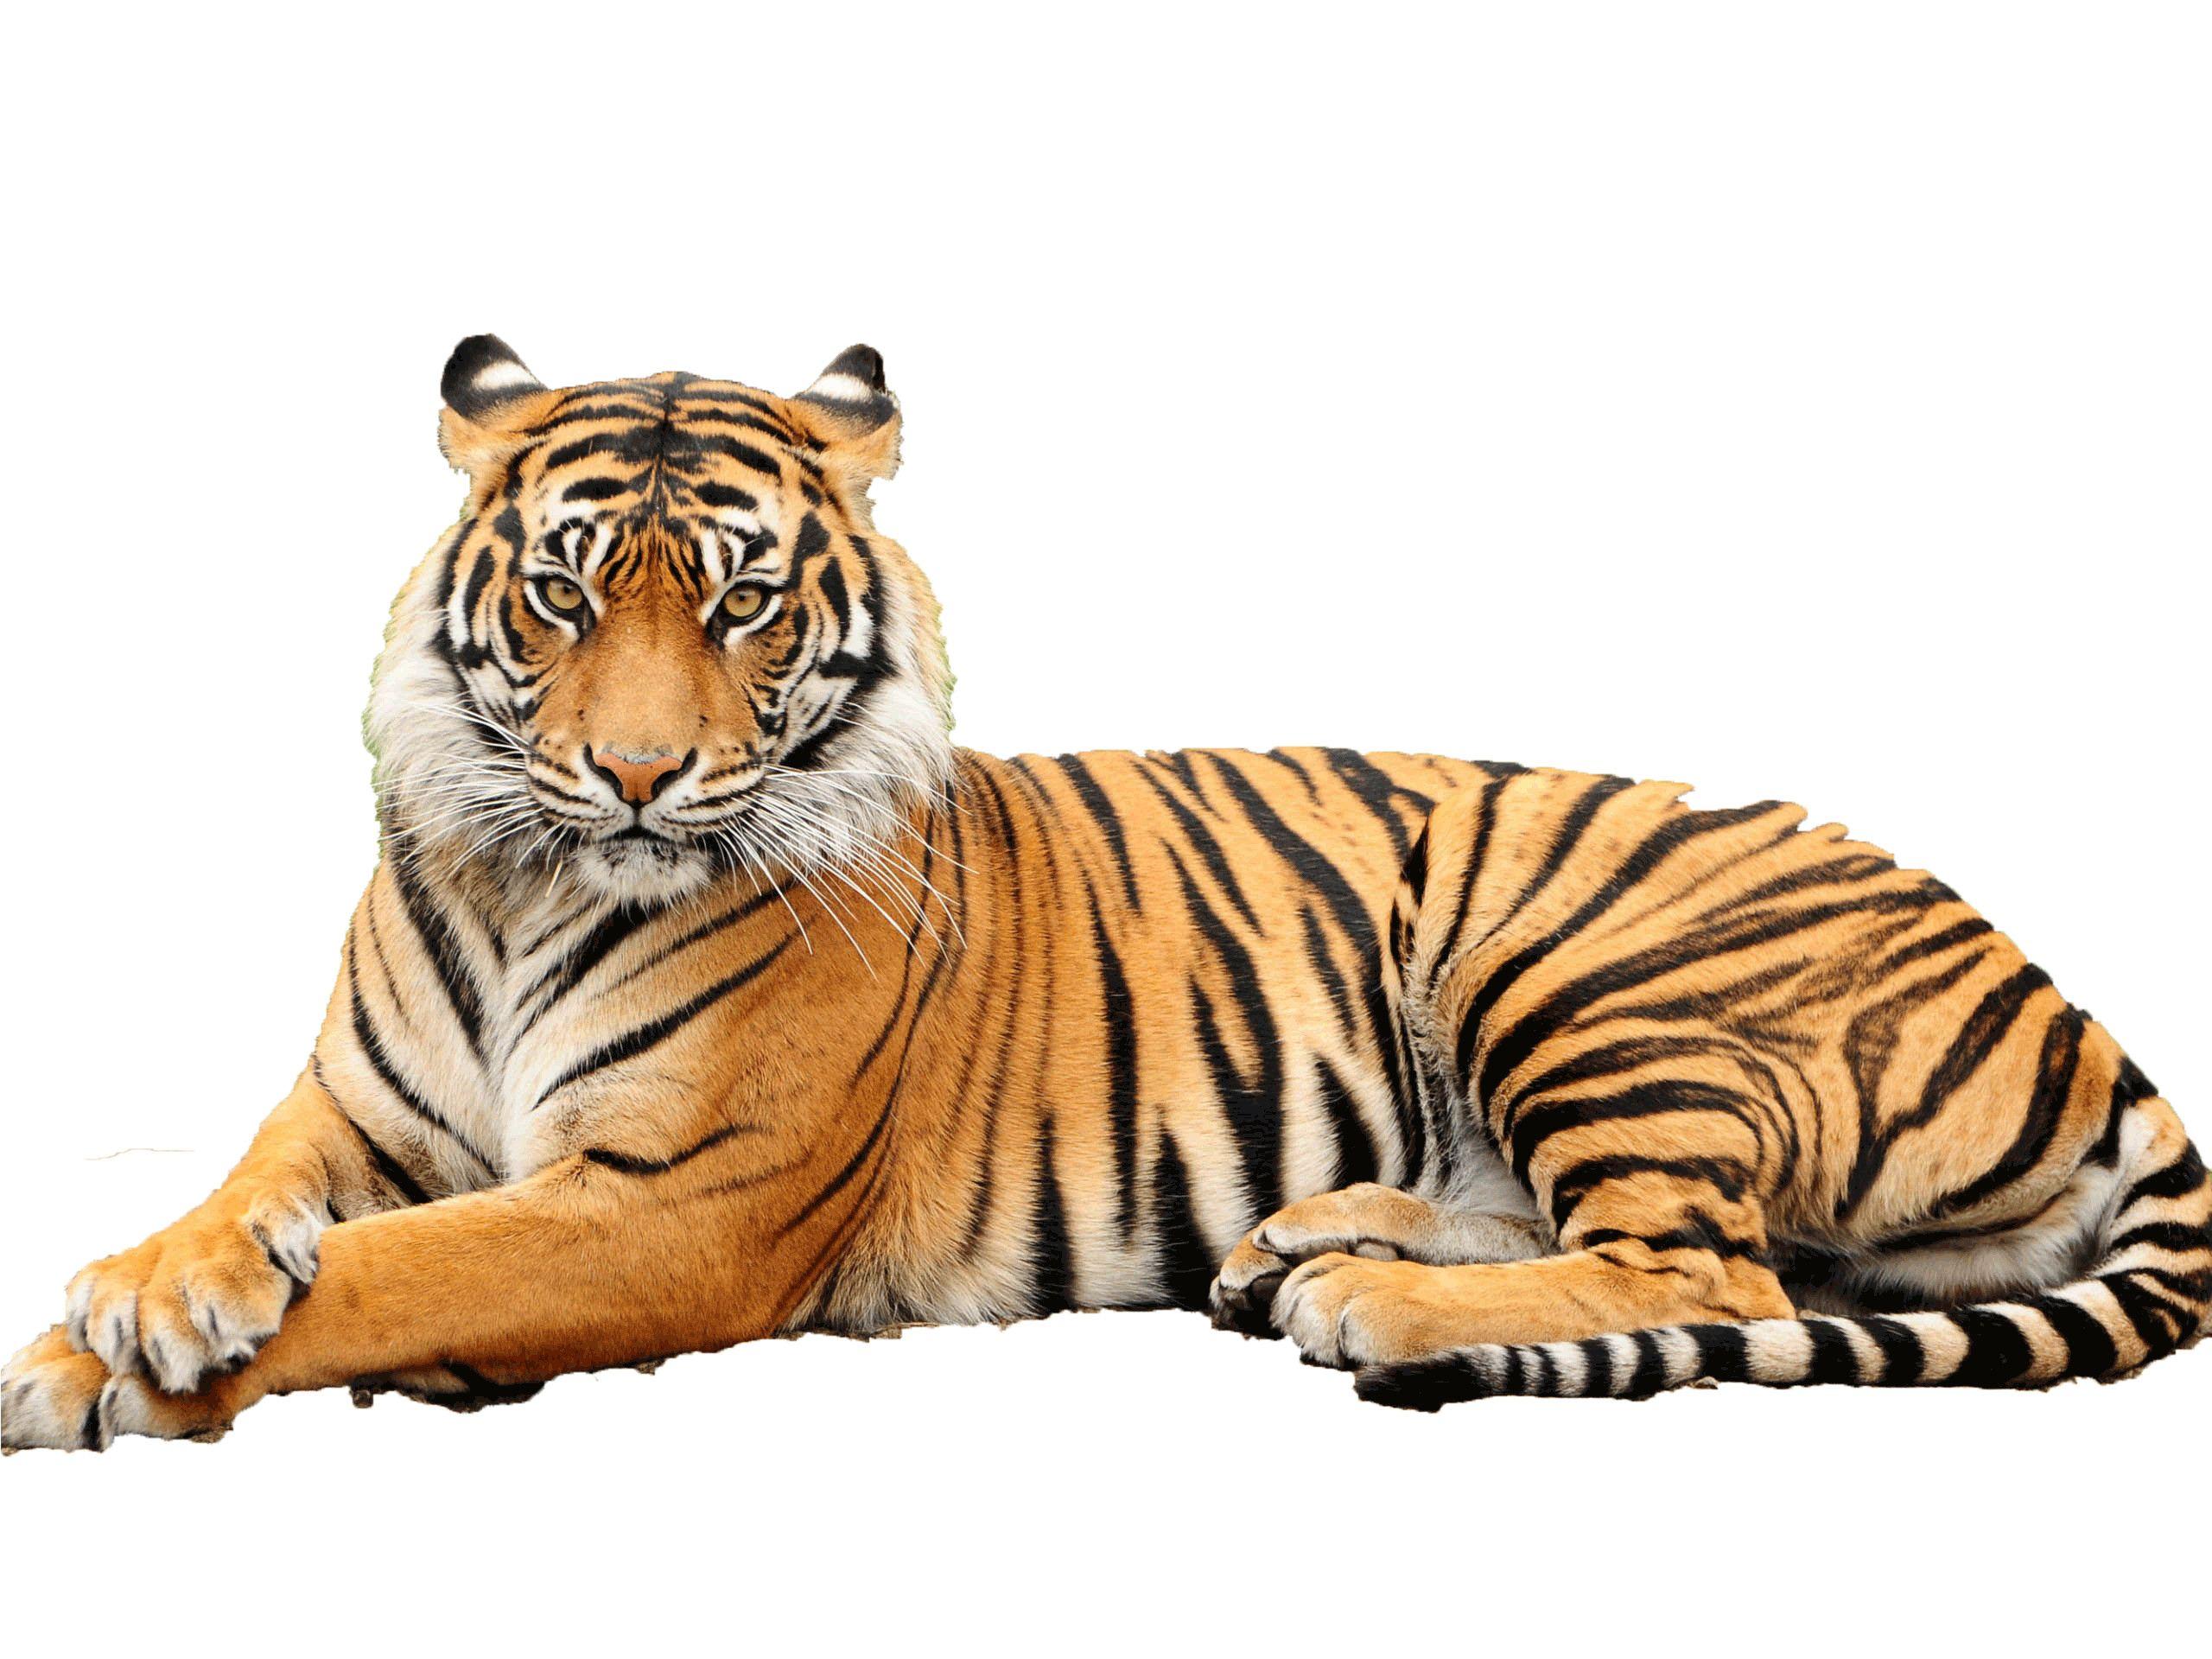 Tiger White Background